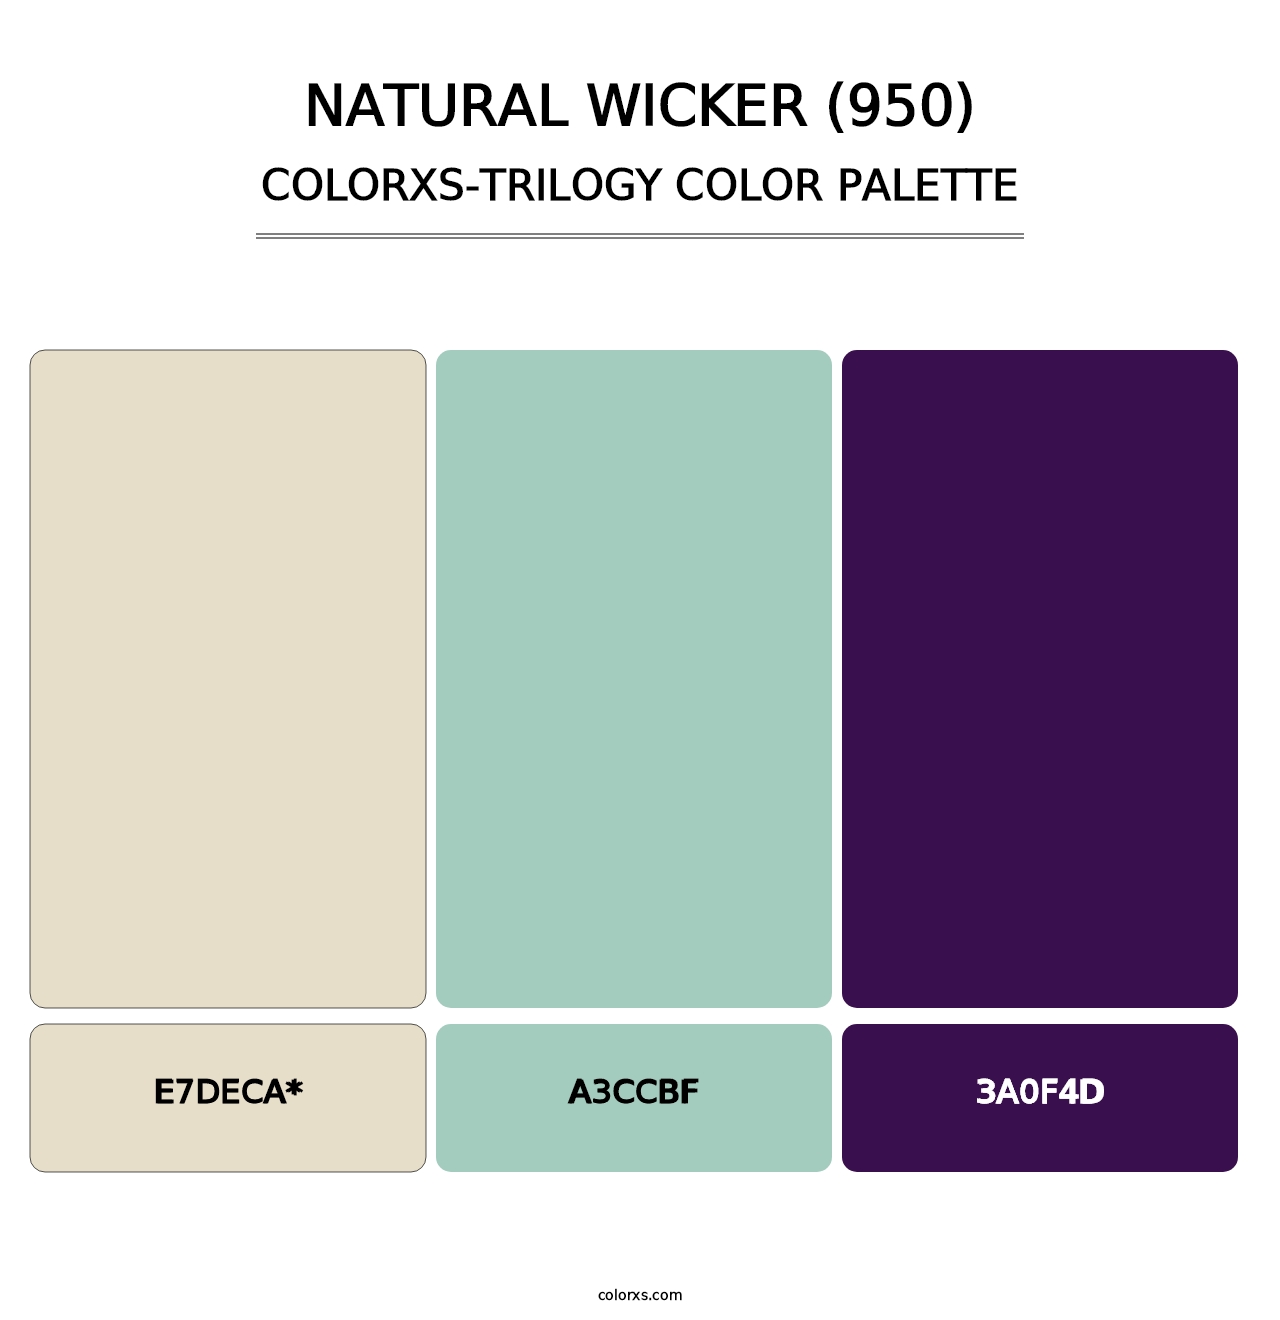 Natural Wicker (950) - Colorxs Trilogy Palette